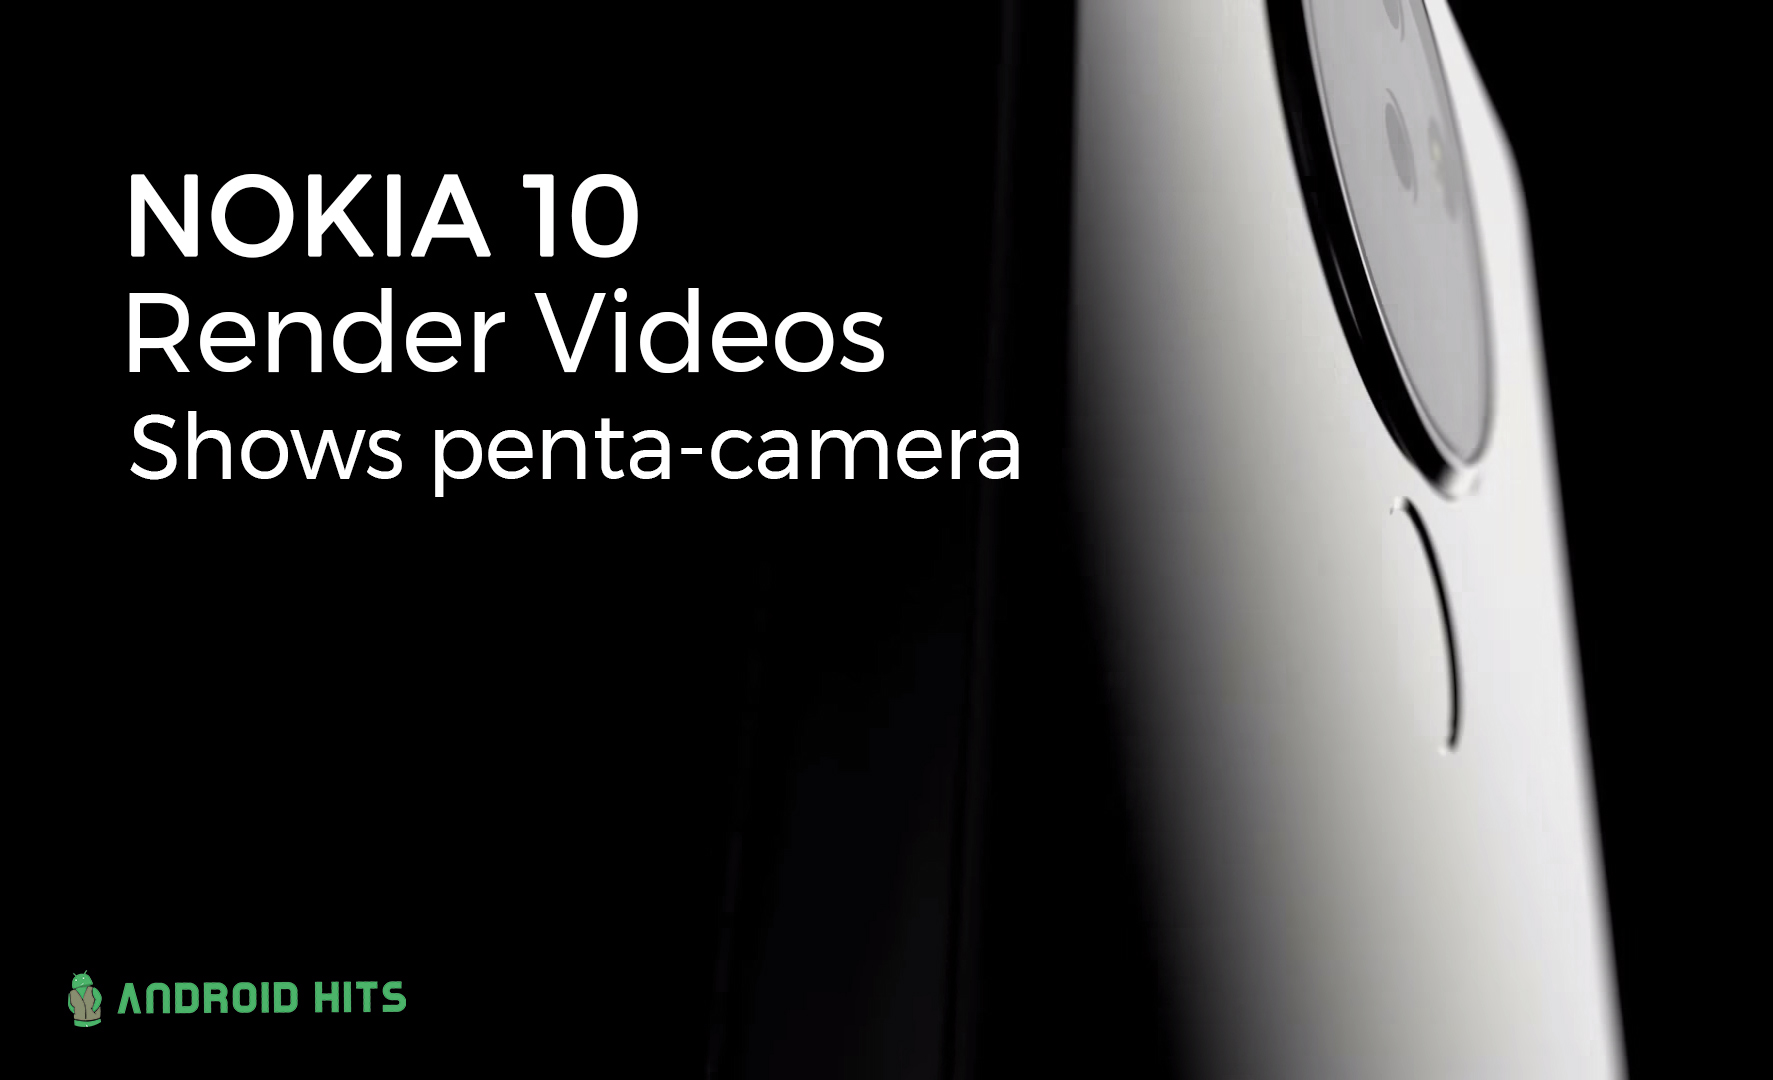 Nokia 10: concept render videos show the smartphone in wild 4